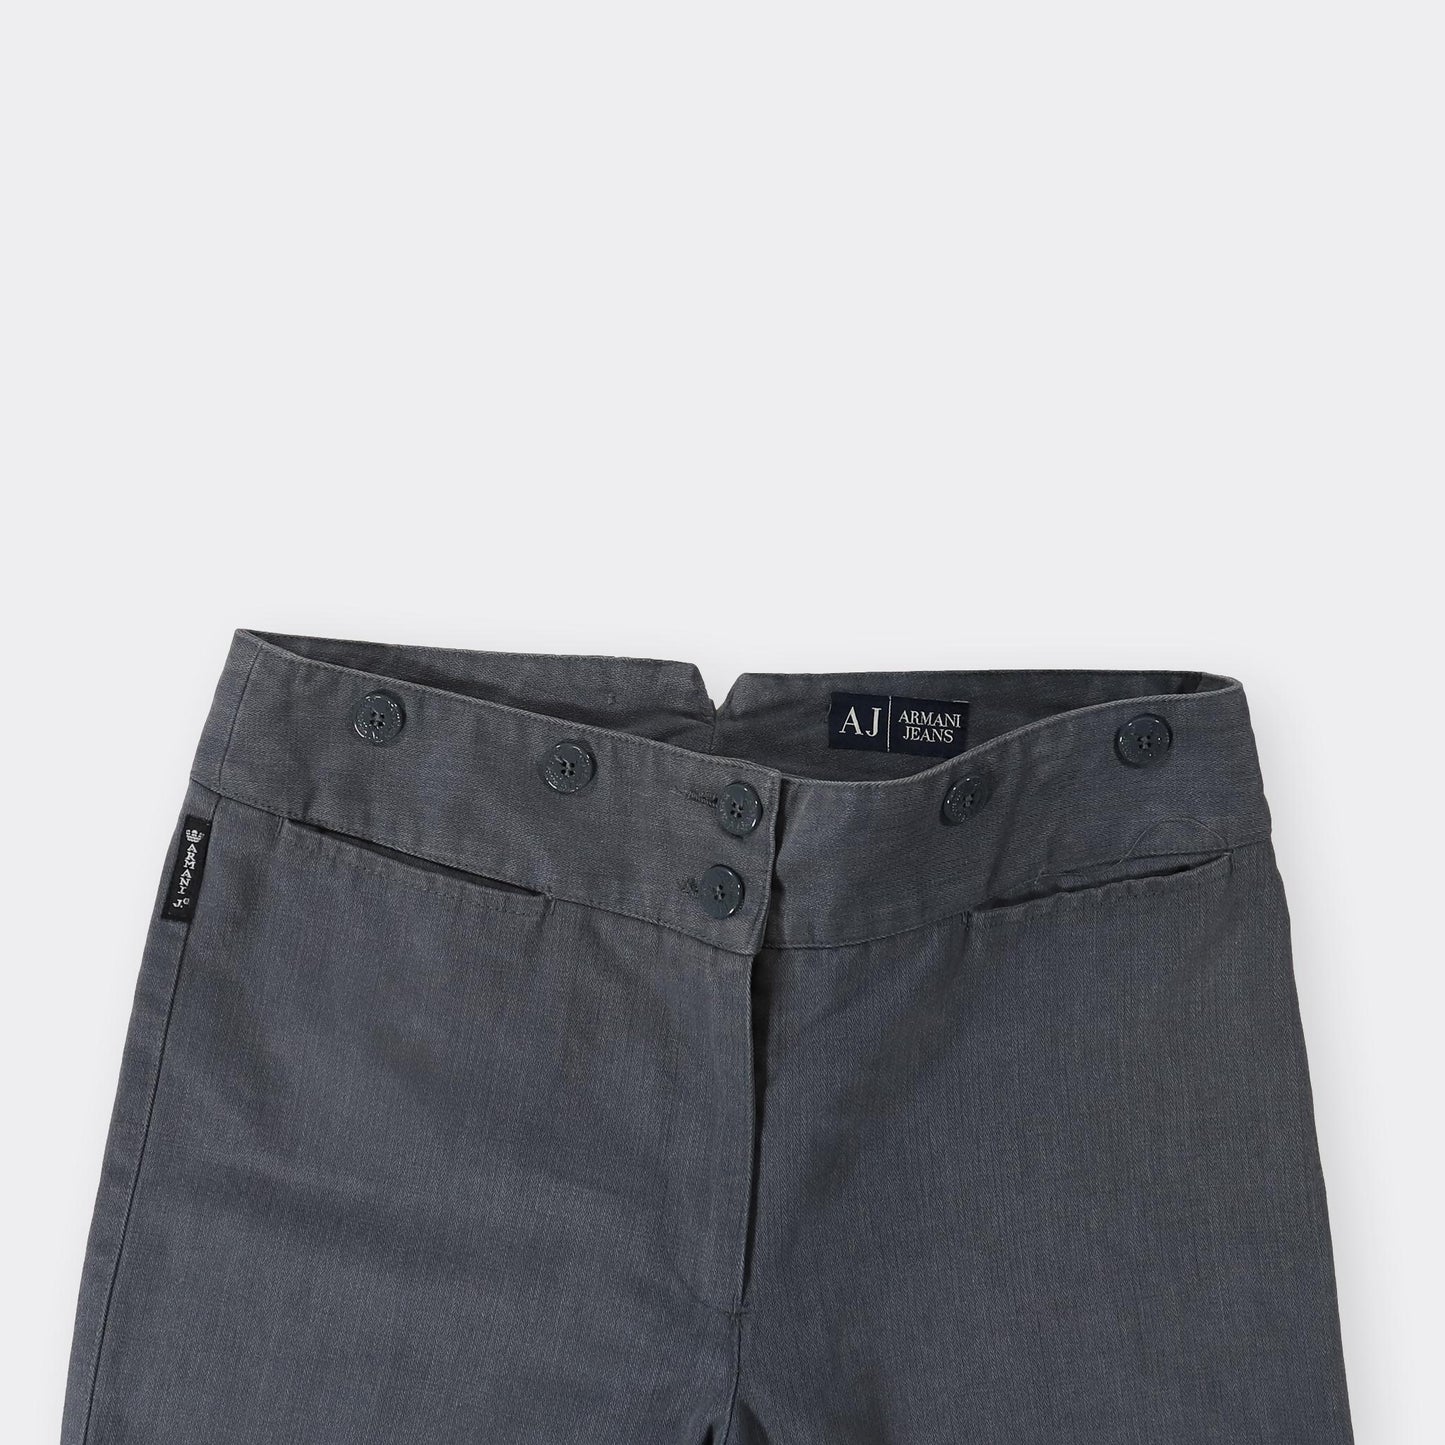 Armani Vintage Trousers - 29" x 29" - Known Source